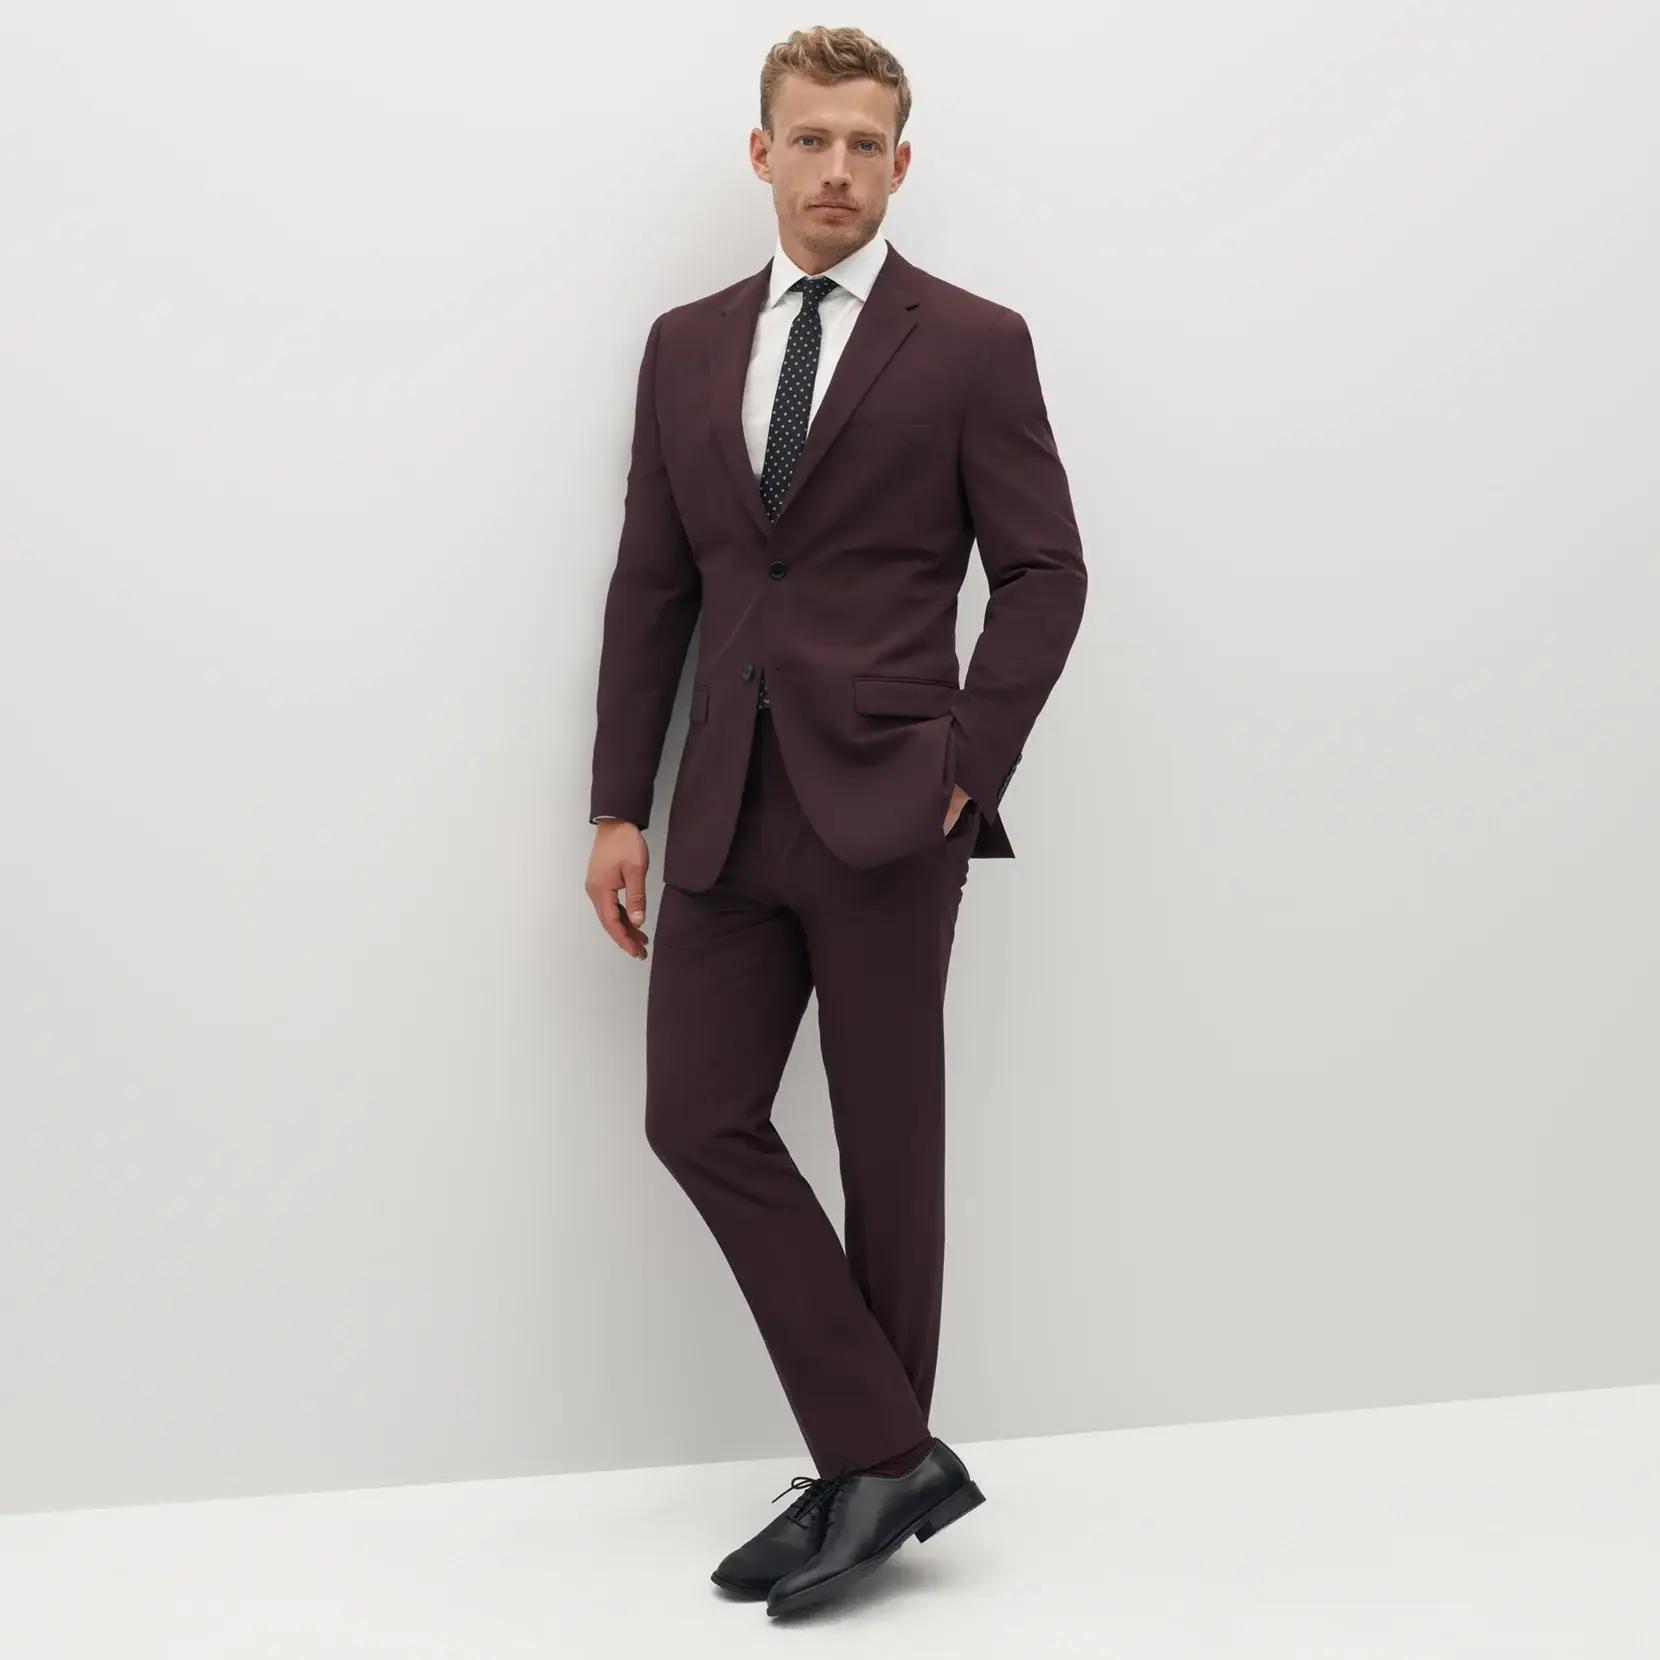 Man in burgundy suit